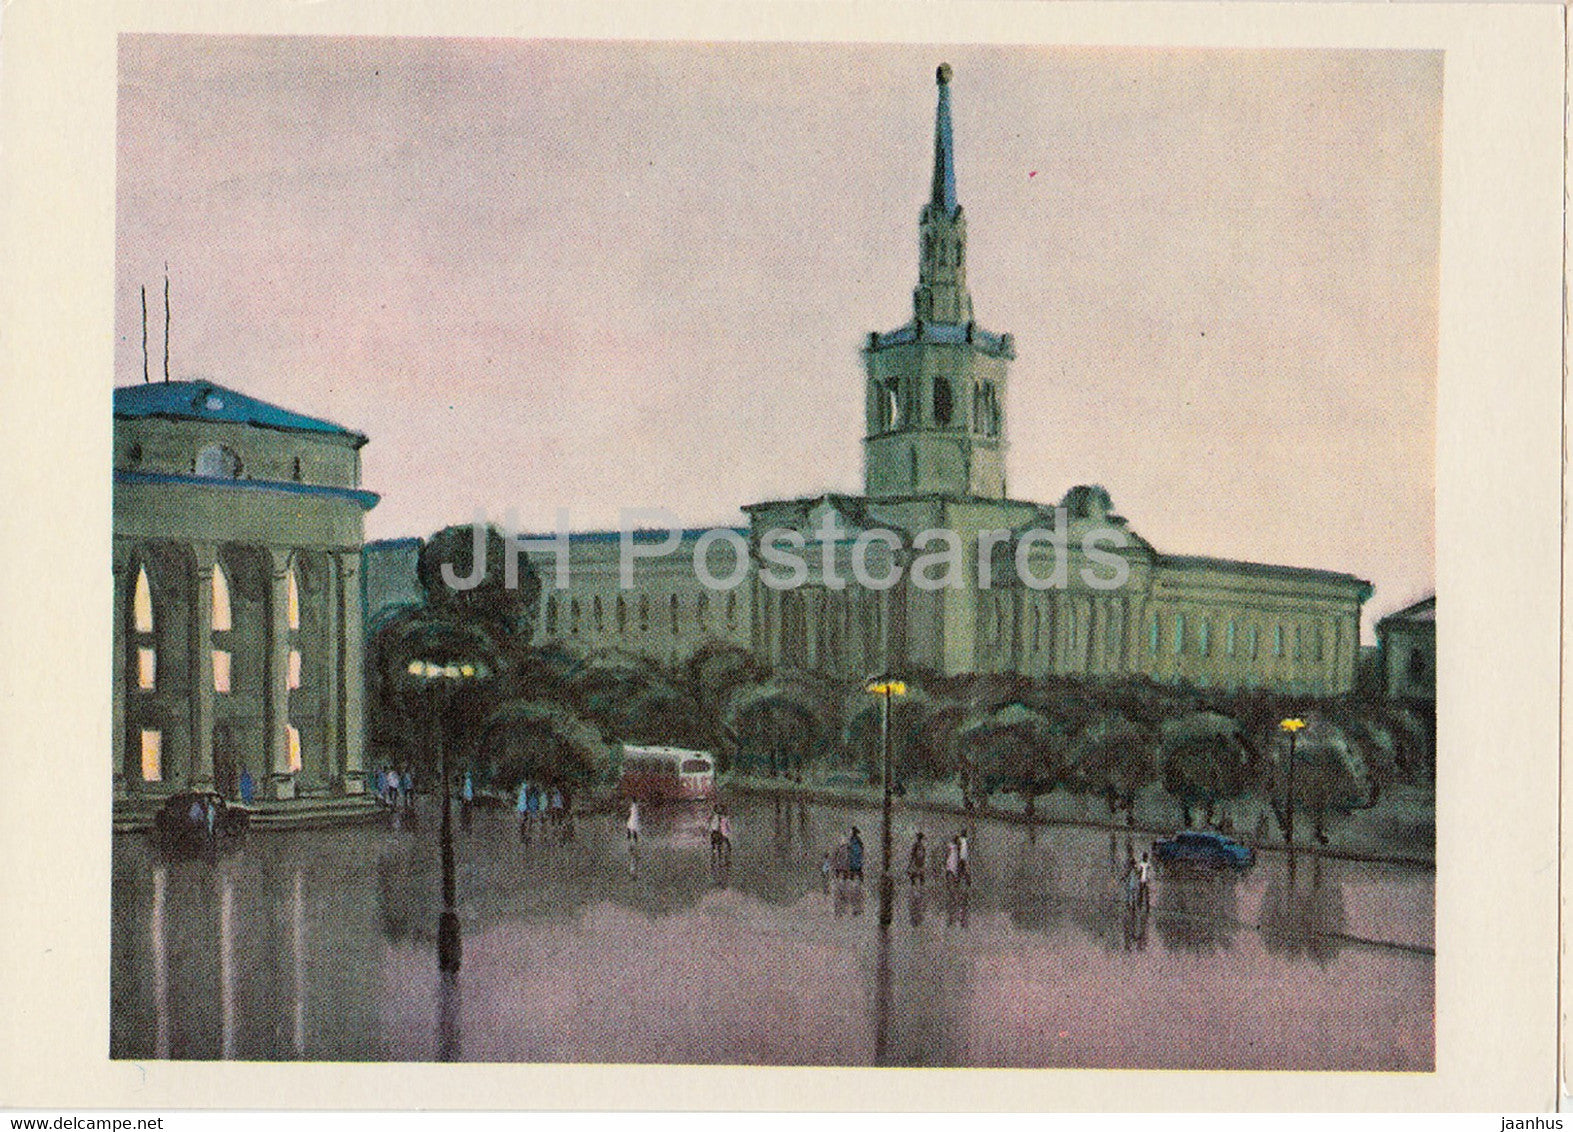 across Kyrgyzstan by V. Rogachev - Frunze city - Bishkek - illustration - 1979 - Russia USSR - unused - JH Postcards